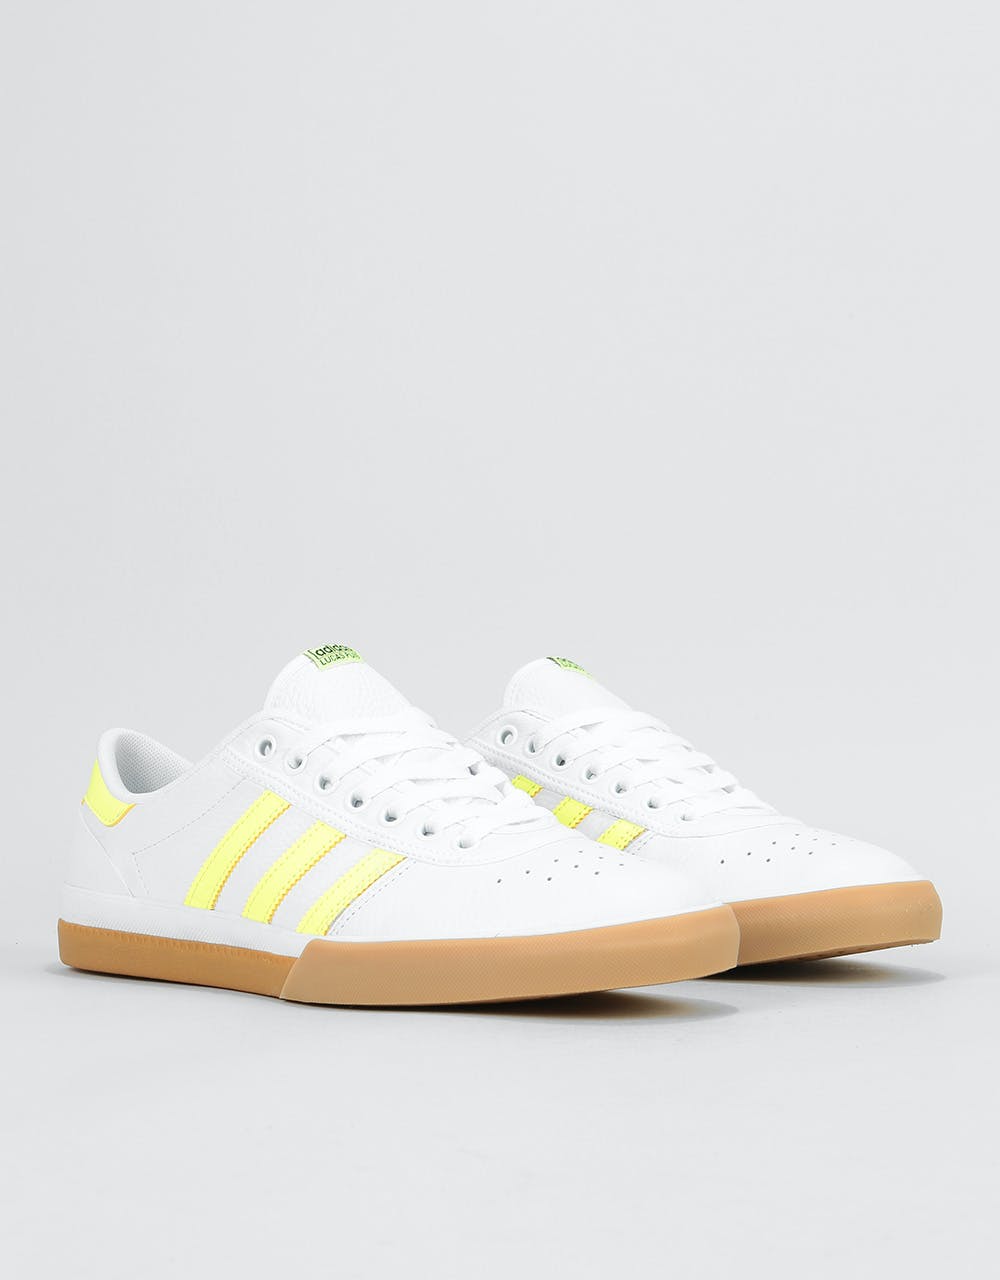 Adidas Lucas Premiere Skate Shoes - White/Hi-Res Yellow/Gum